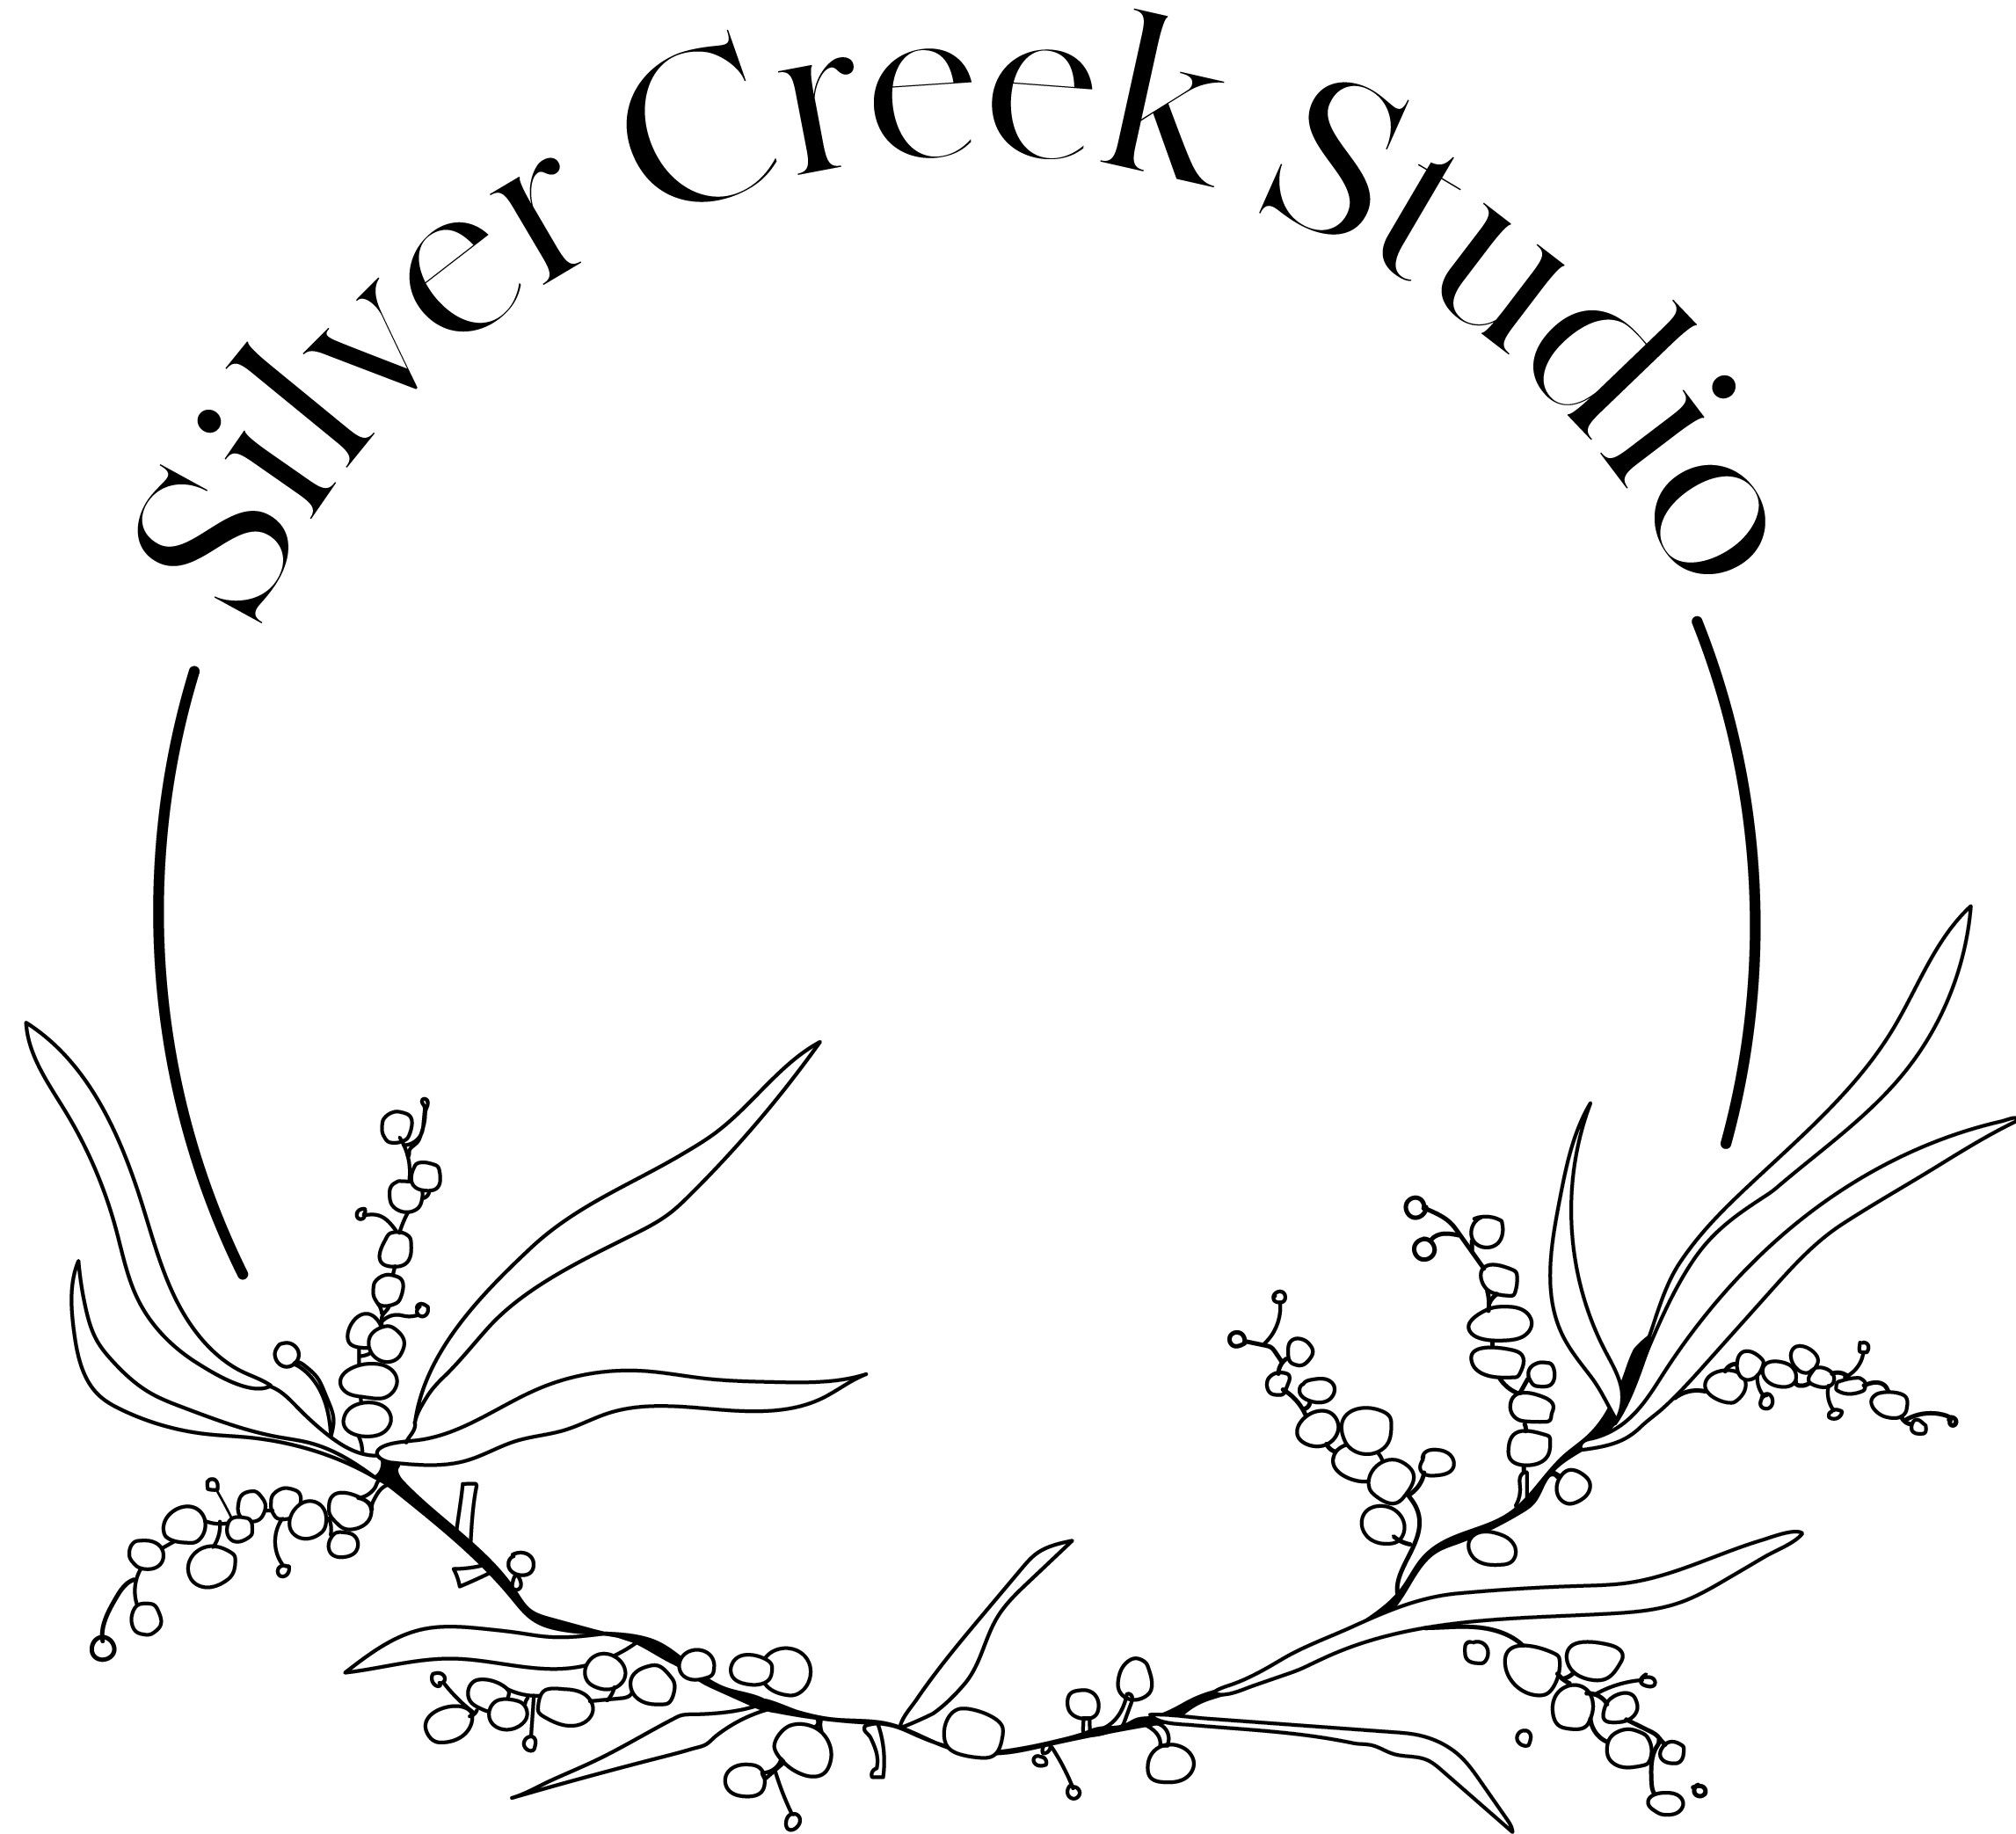 Silver Creek Studio